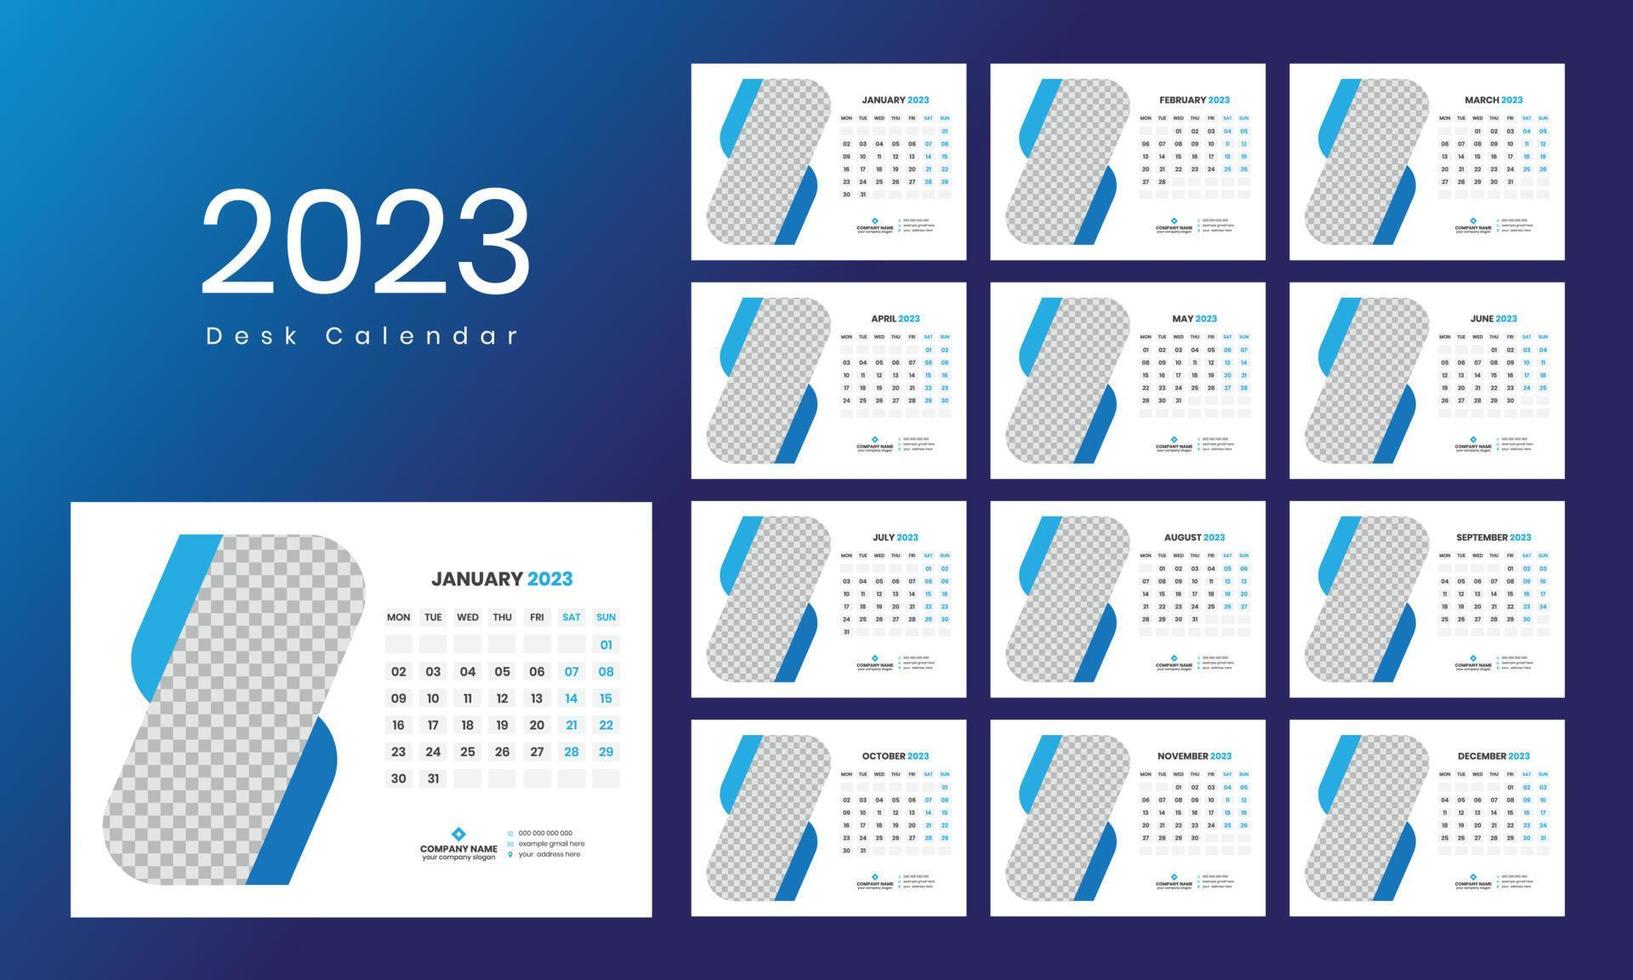 skrivbord kalender mall 2023 vektor